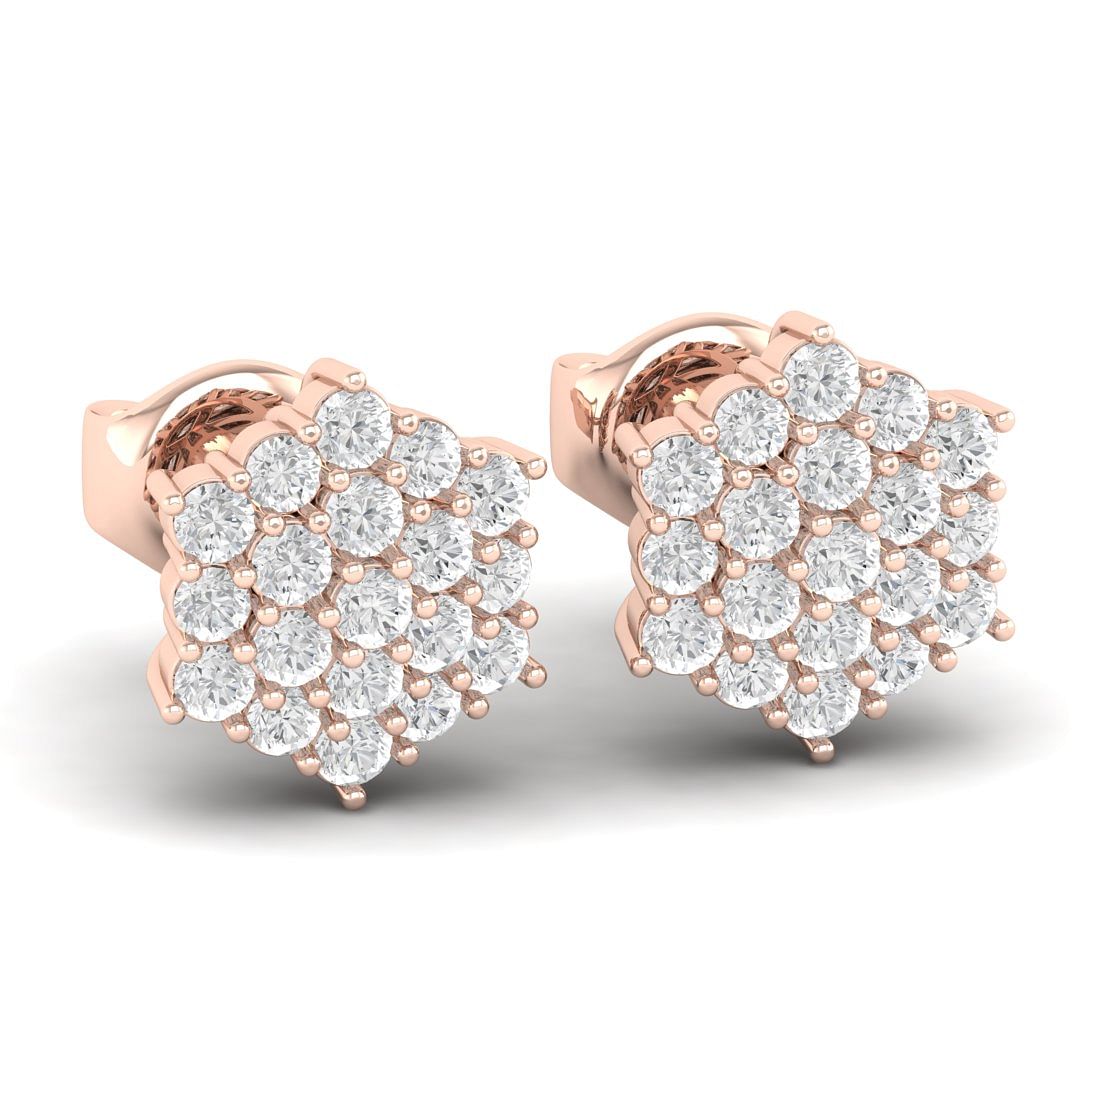 14k Rose Gold Galaxy Diamond Earrings For Her